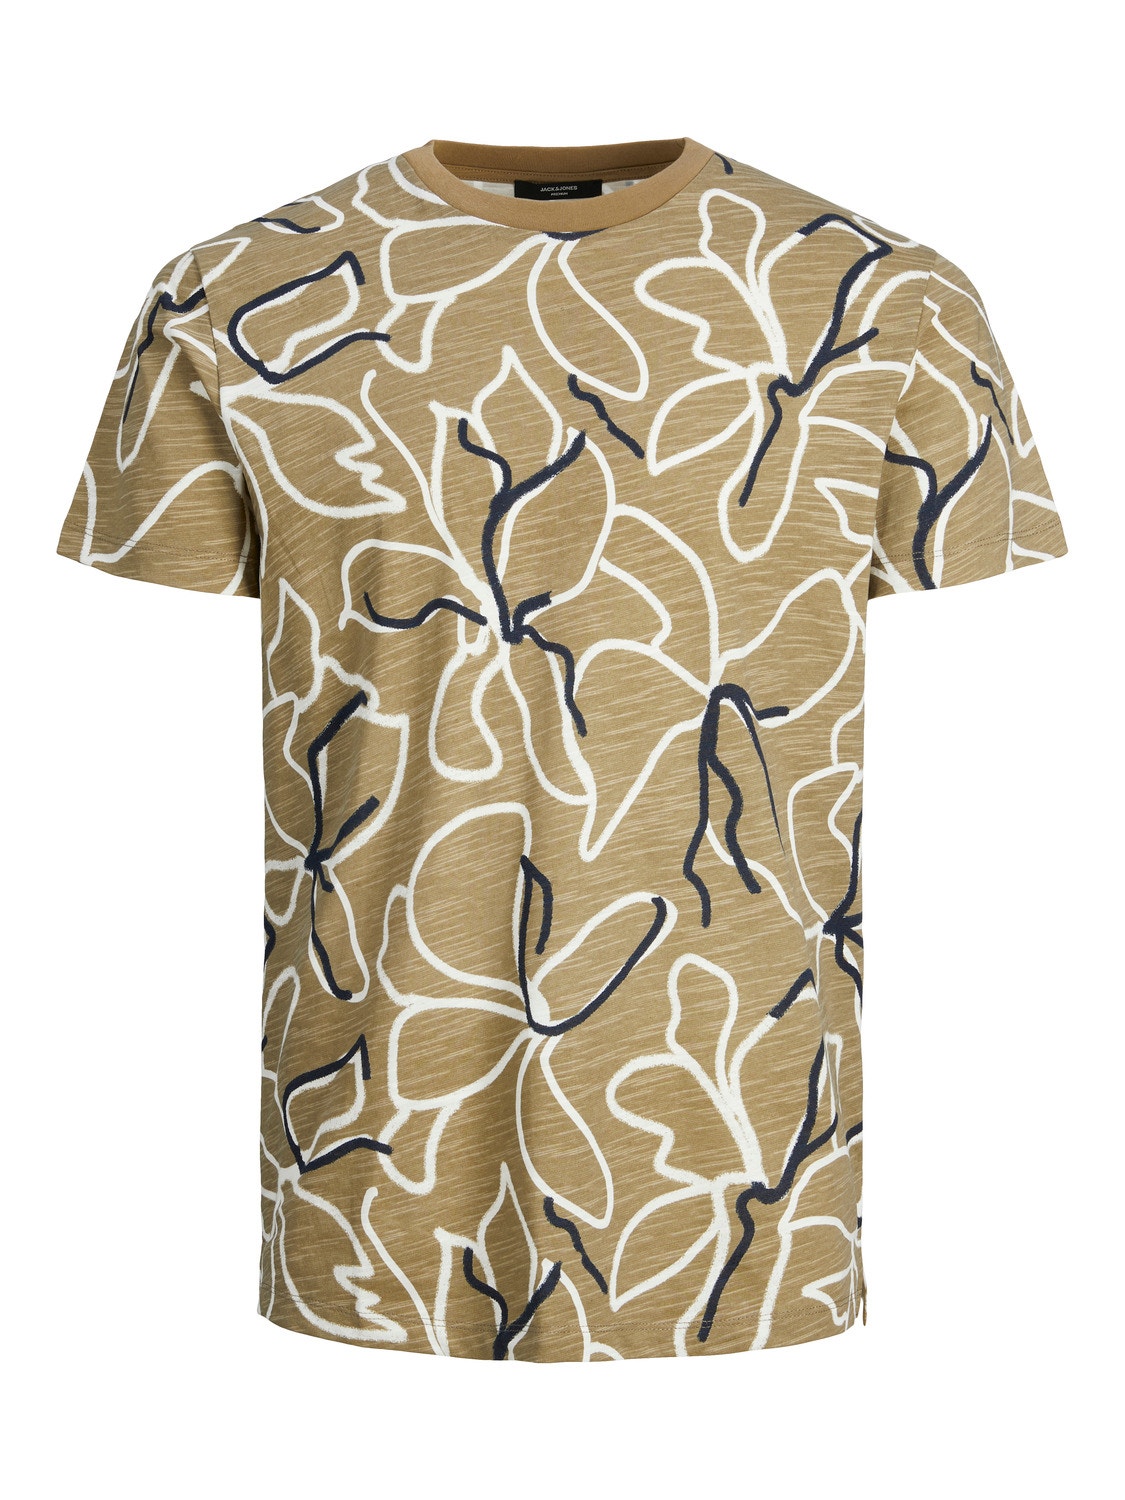 Jack & Jones Tropical Crew neck T-shirt -Covert Green - 12203764